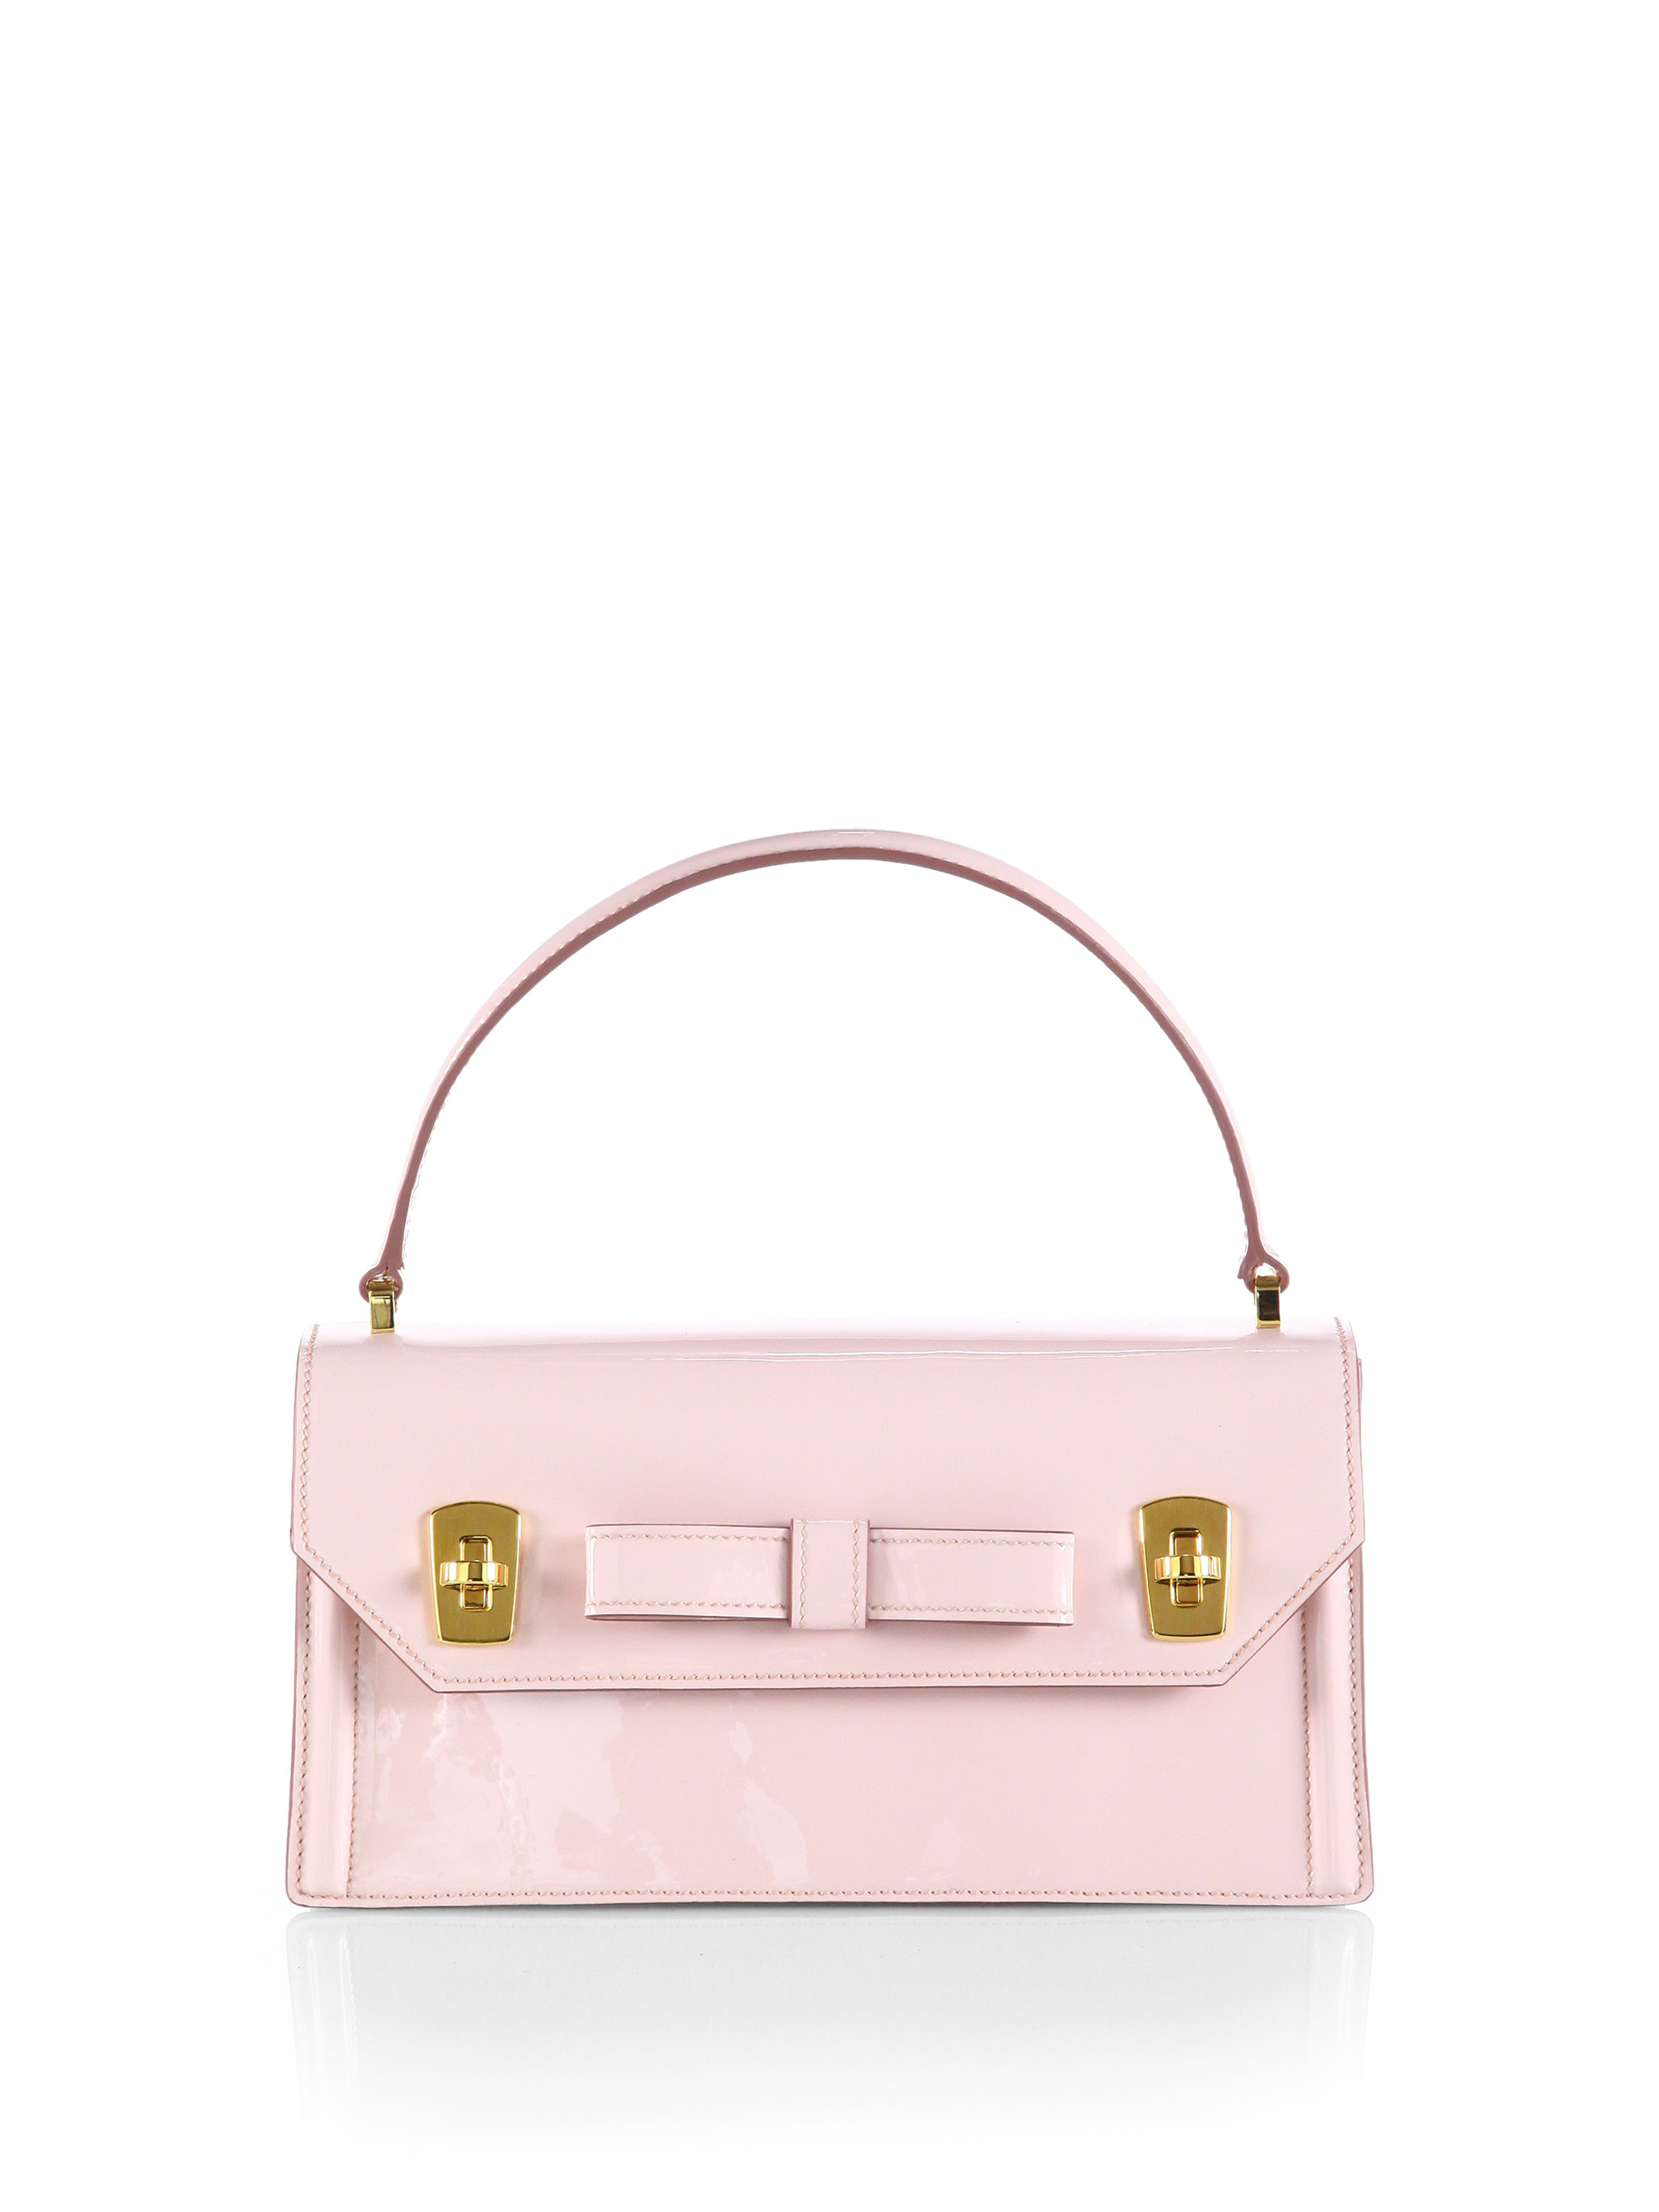 Miu Miu Bow Mini Patent Leather Top Handle Bag in Pink (LIGHT PINK) | Lyst